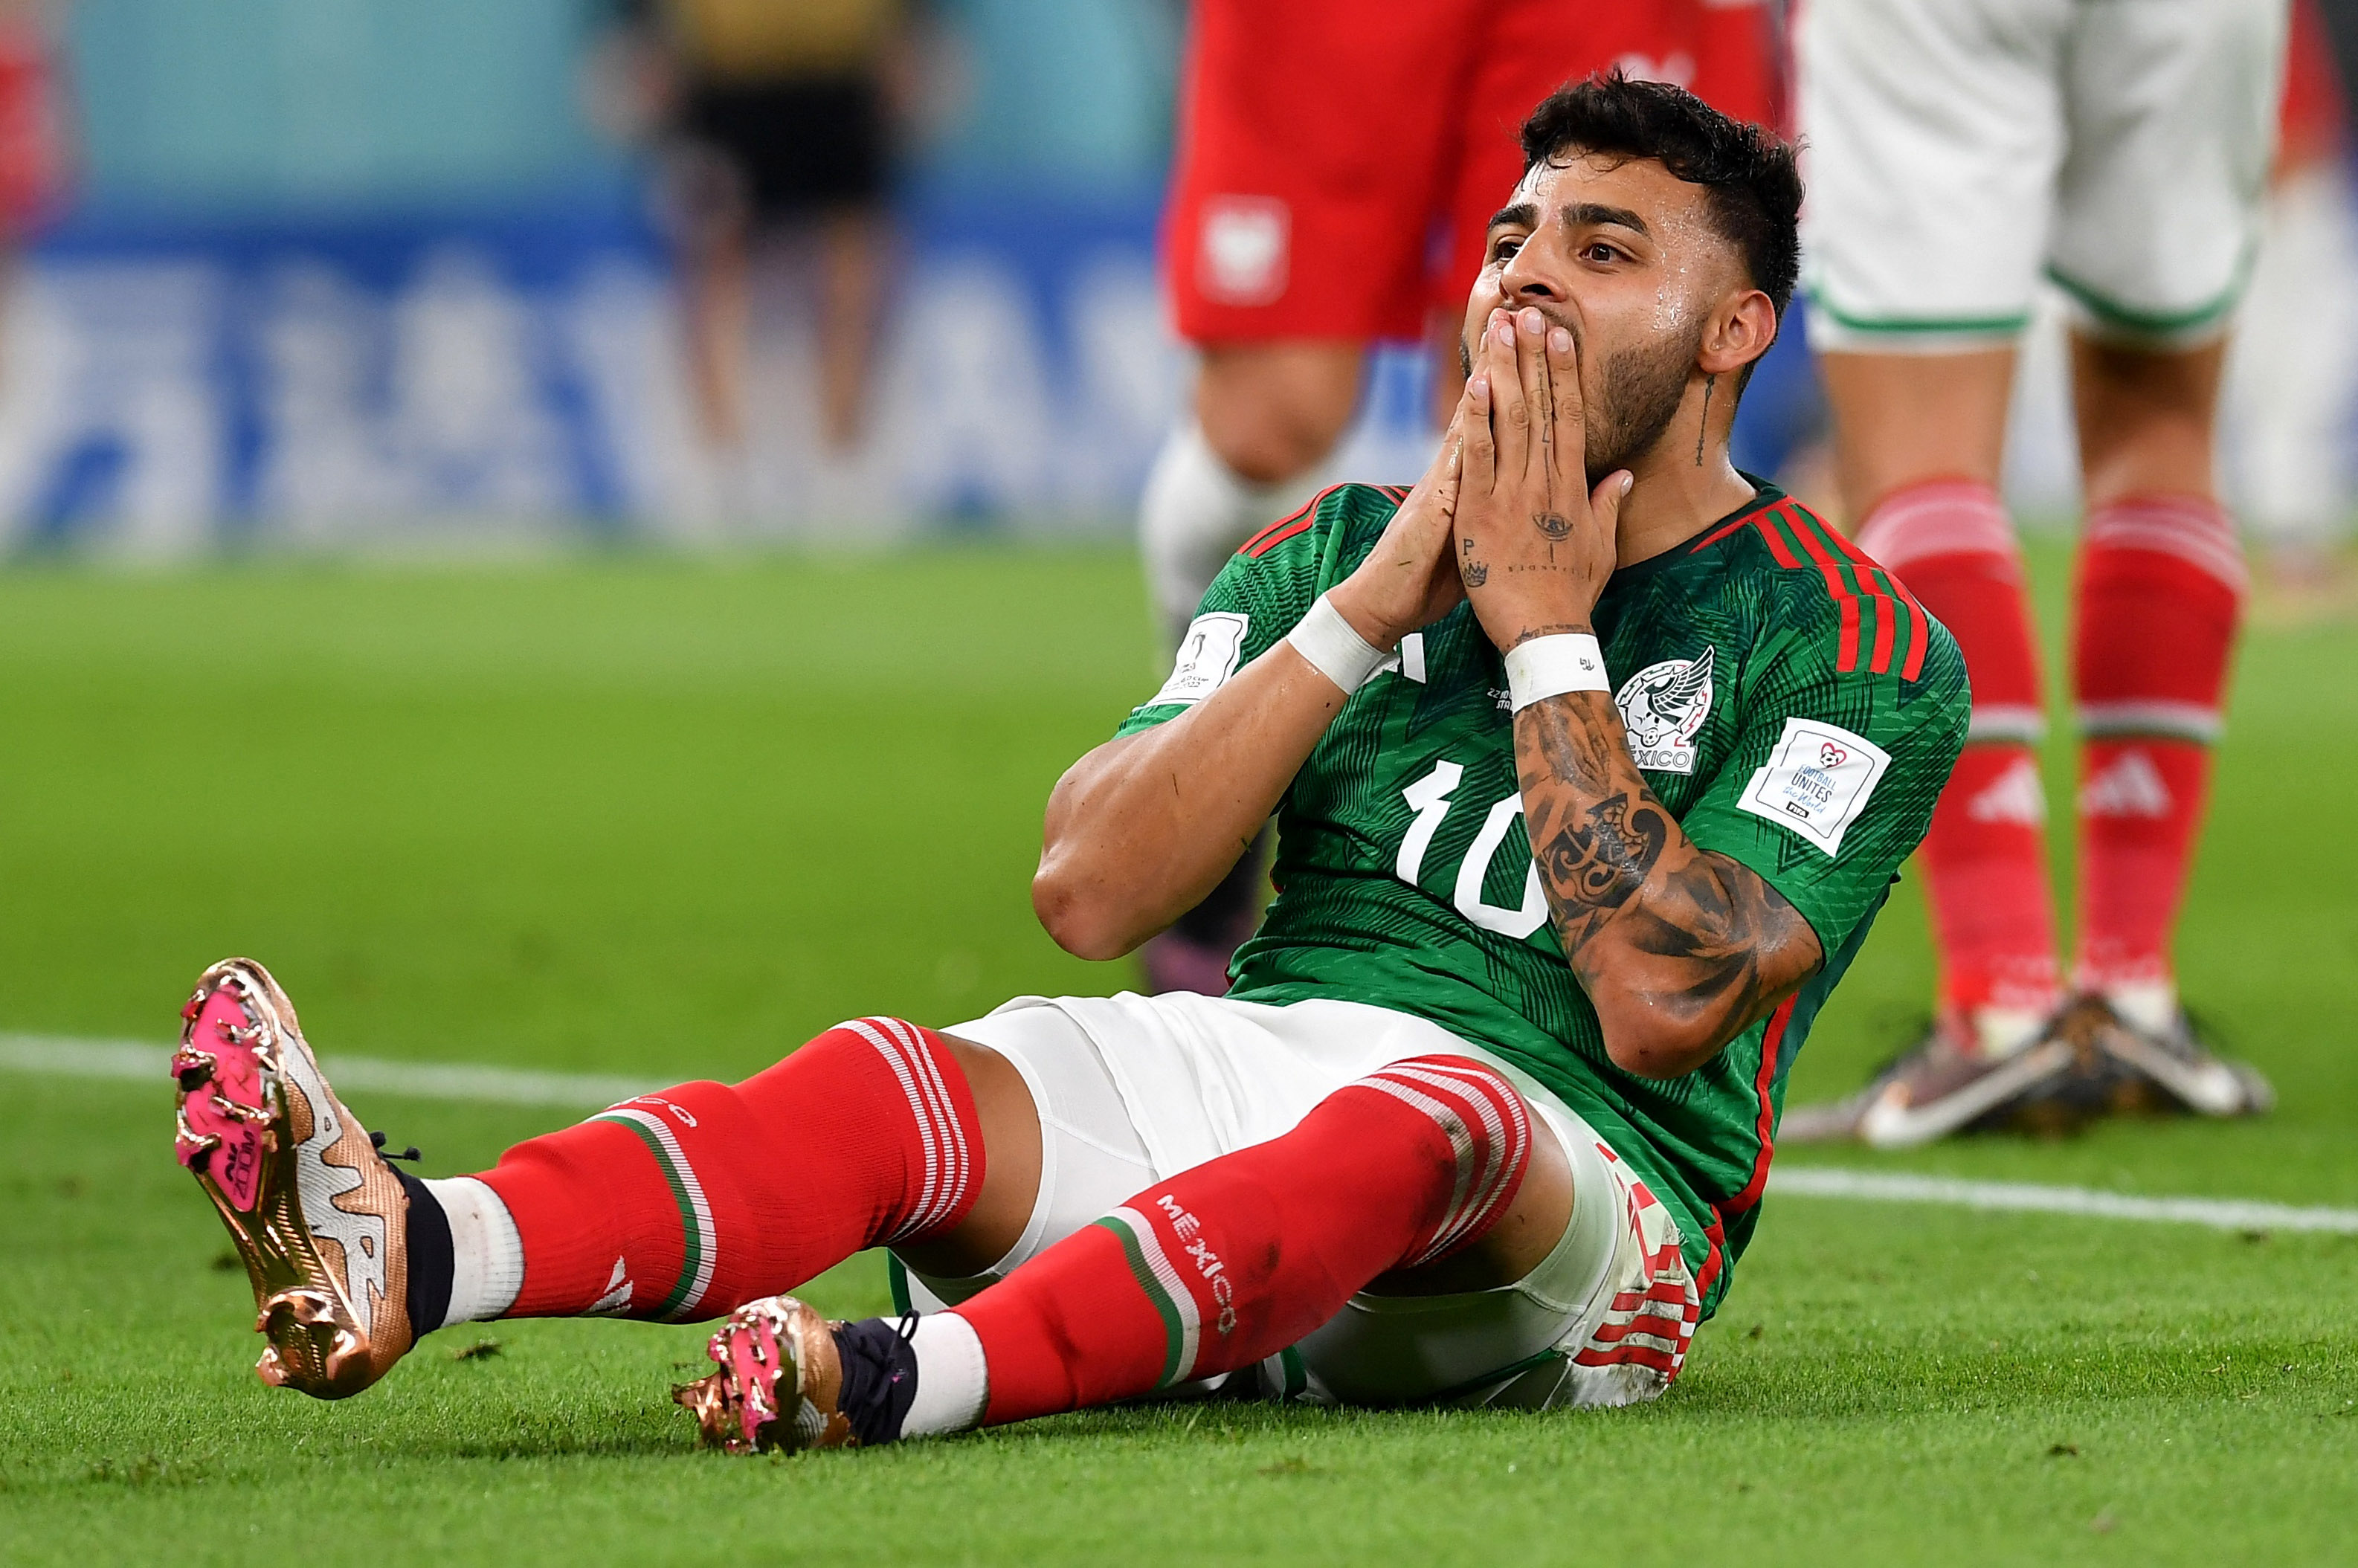 Soccer Football - FIFA World Cup Qatar 2022 - Group C - Mexico v Poland - Stadium 974, Doha, Qatar - November 22, 2022 Mexico's Alexis Vega reacts REUTERS/Jennifer Lorenzini